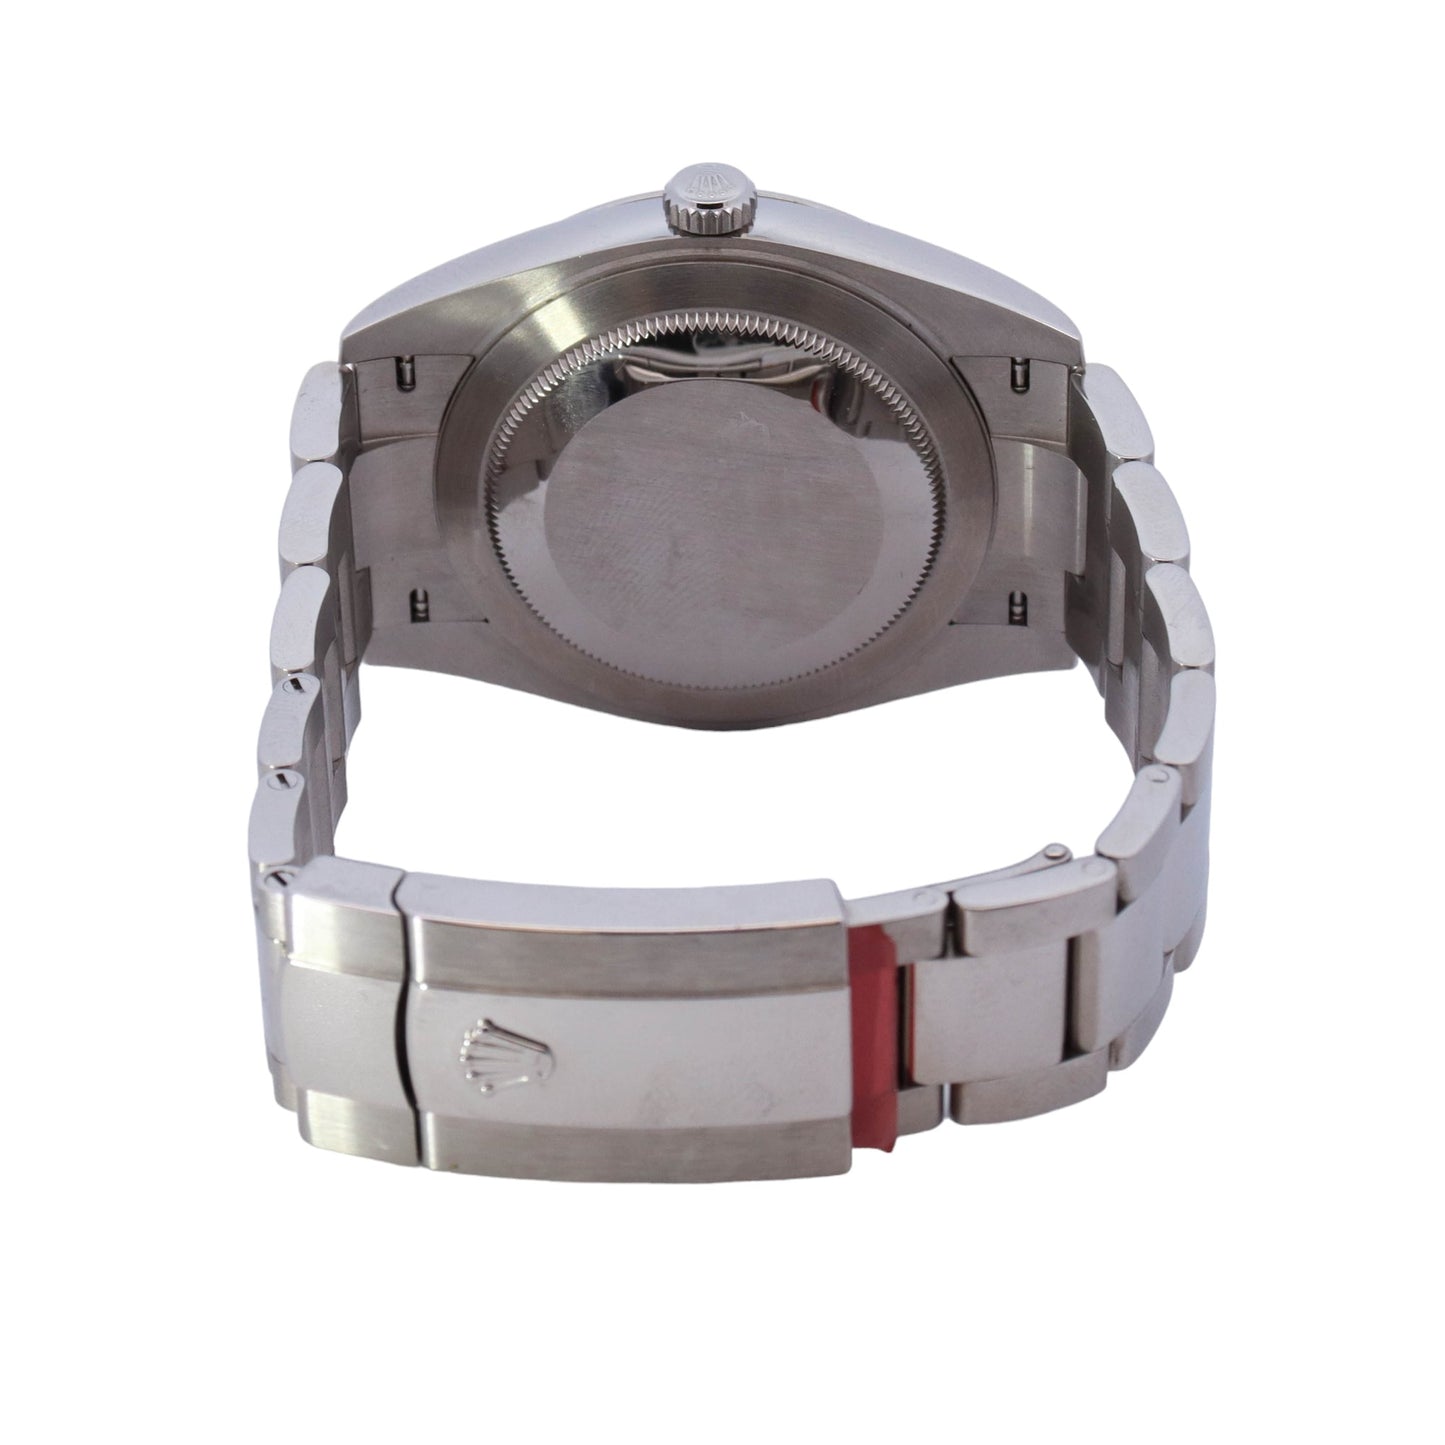 Rolex Datejust Stainless Steel 41mm White Roman Dial Watch Reference# 126300 - Happy Jewelers Fine Jewelry Lifetime Warranty